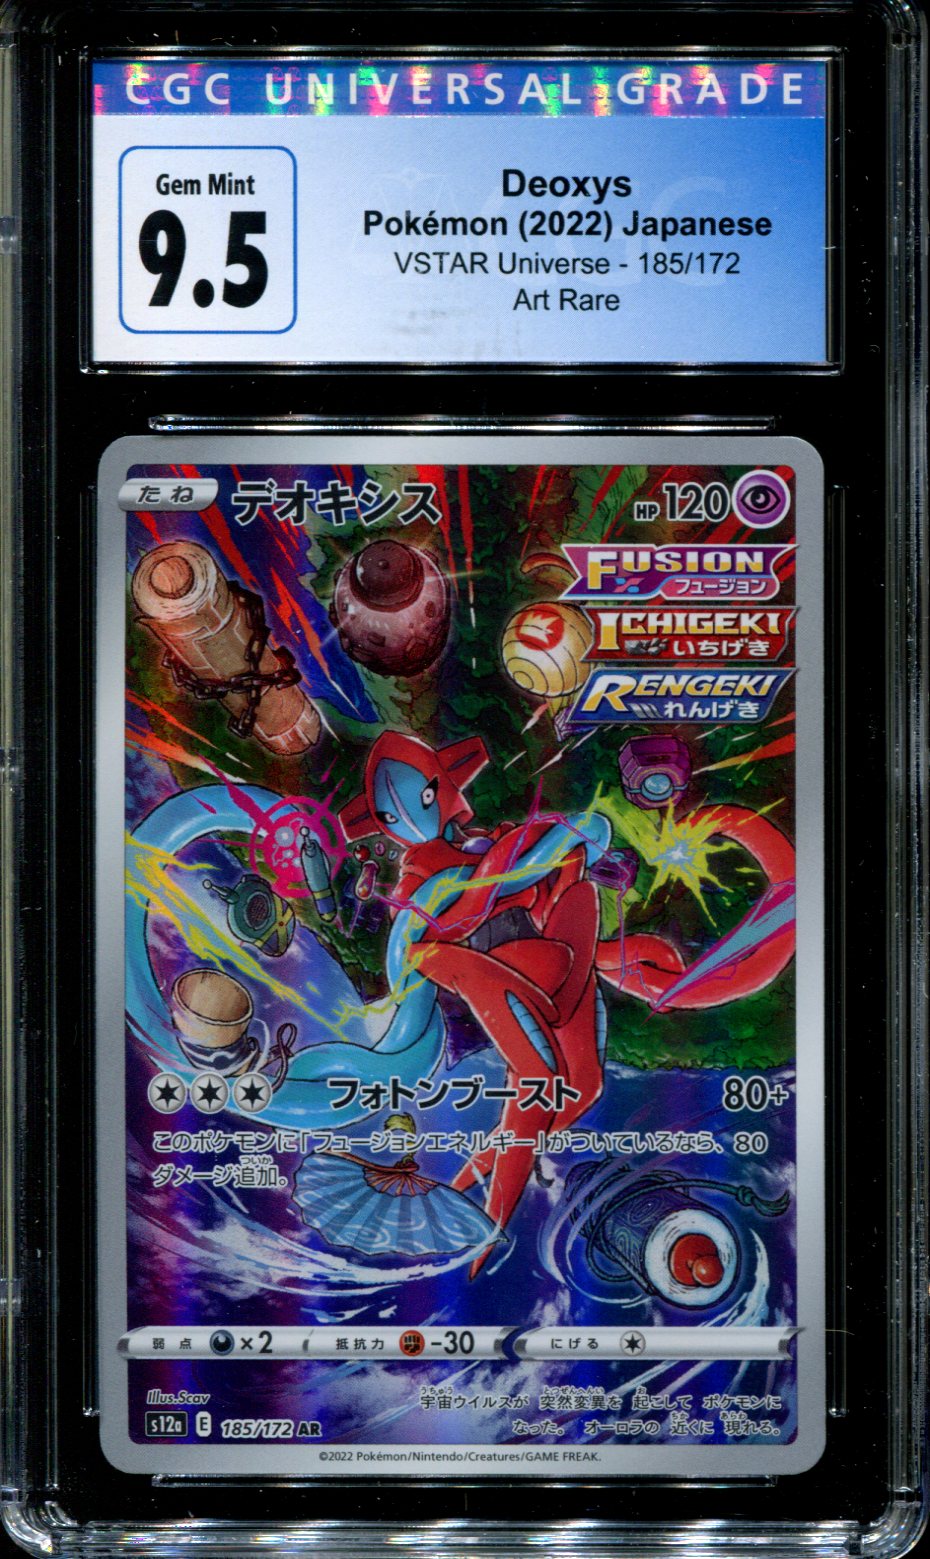 Deoxys - 185/172 - CGC 9.5 - Art Rare - Vstar Universe - Pokemon